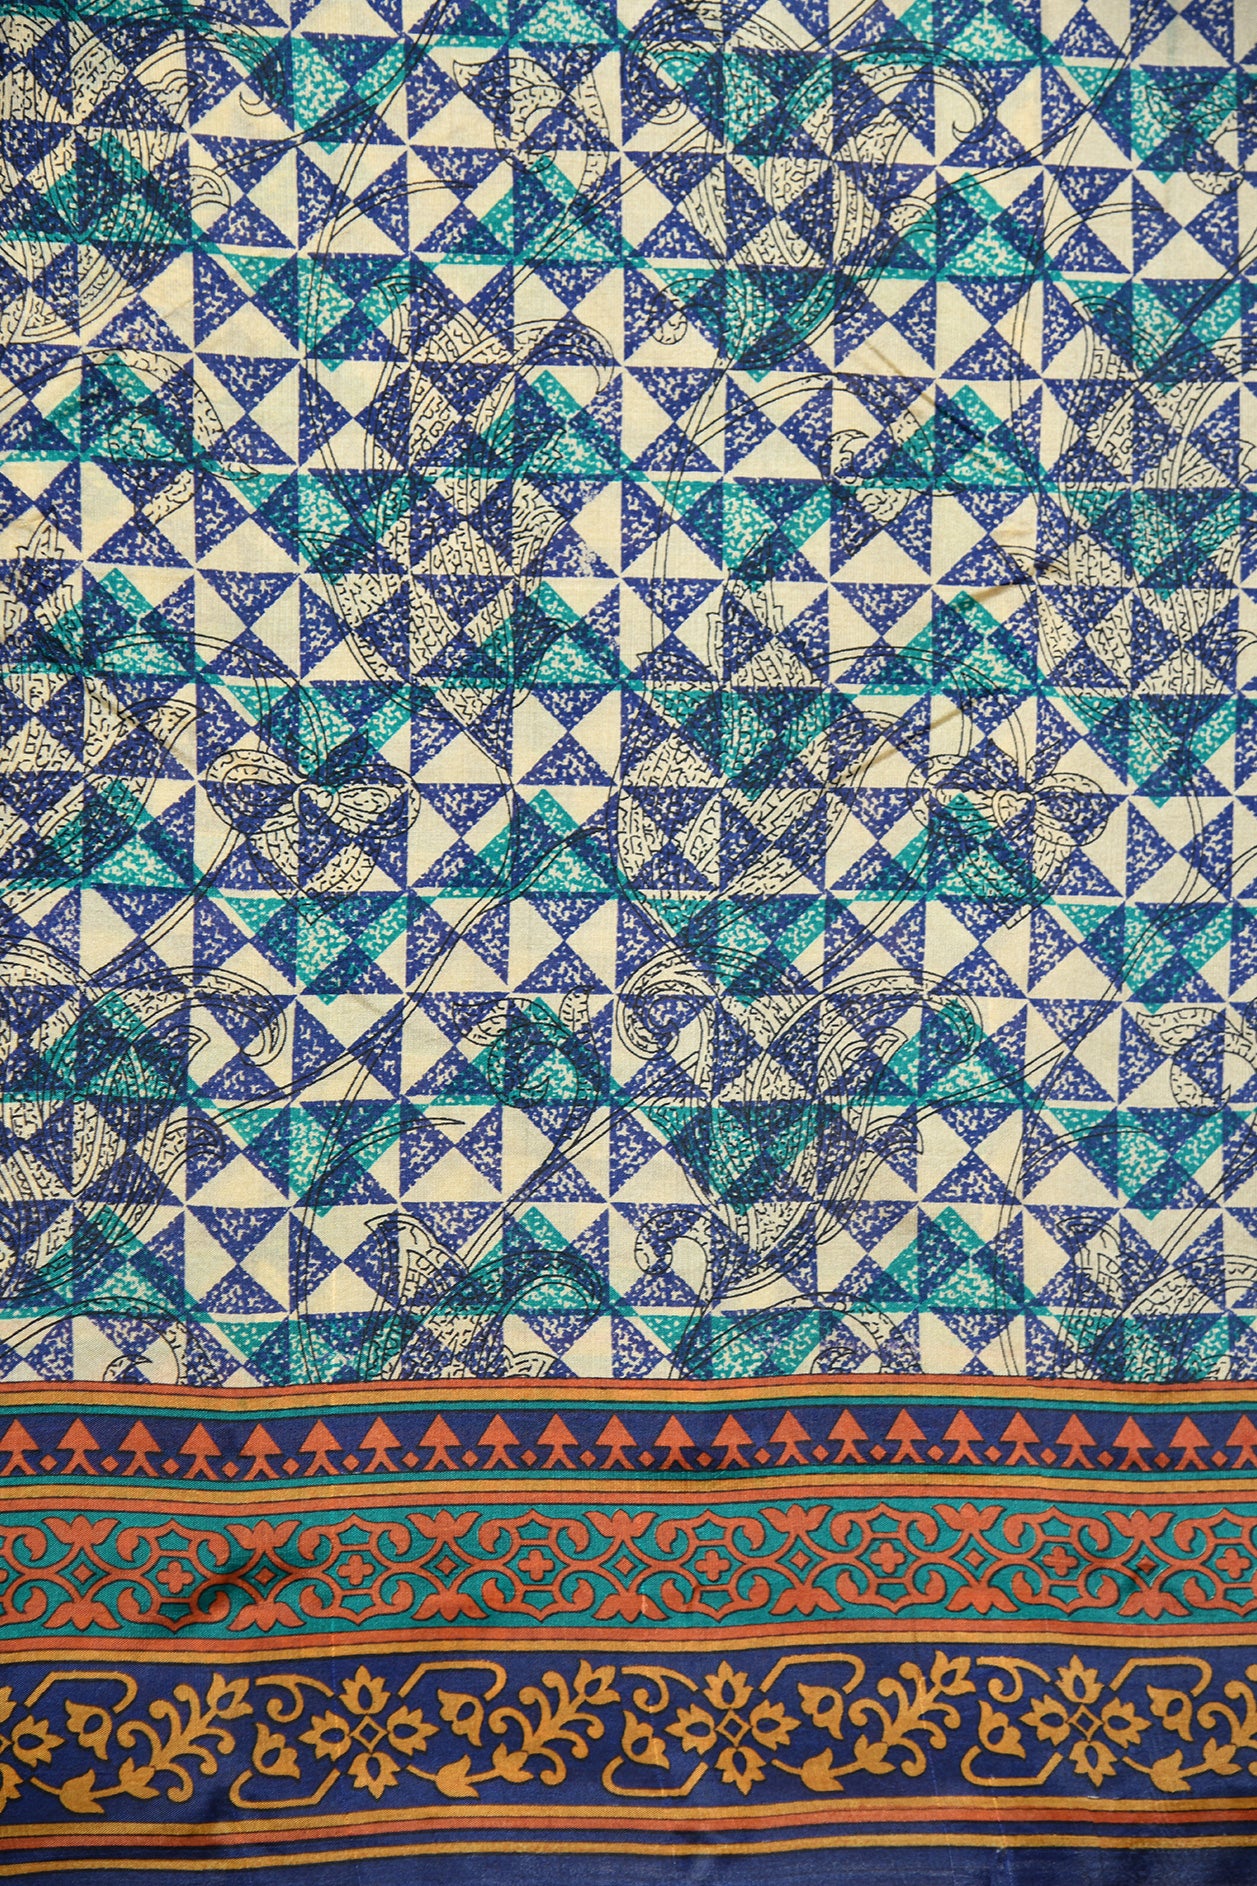 Geometric And Floral Design Digital Printed Indigo Blue Raw Silk Saree